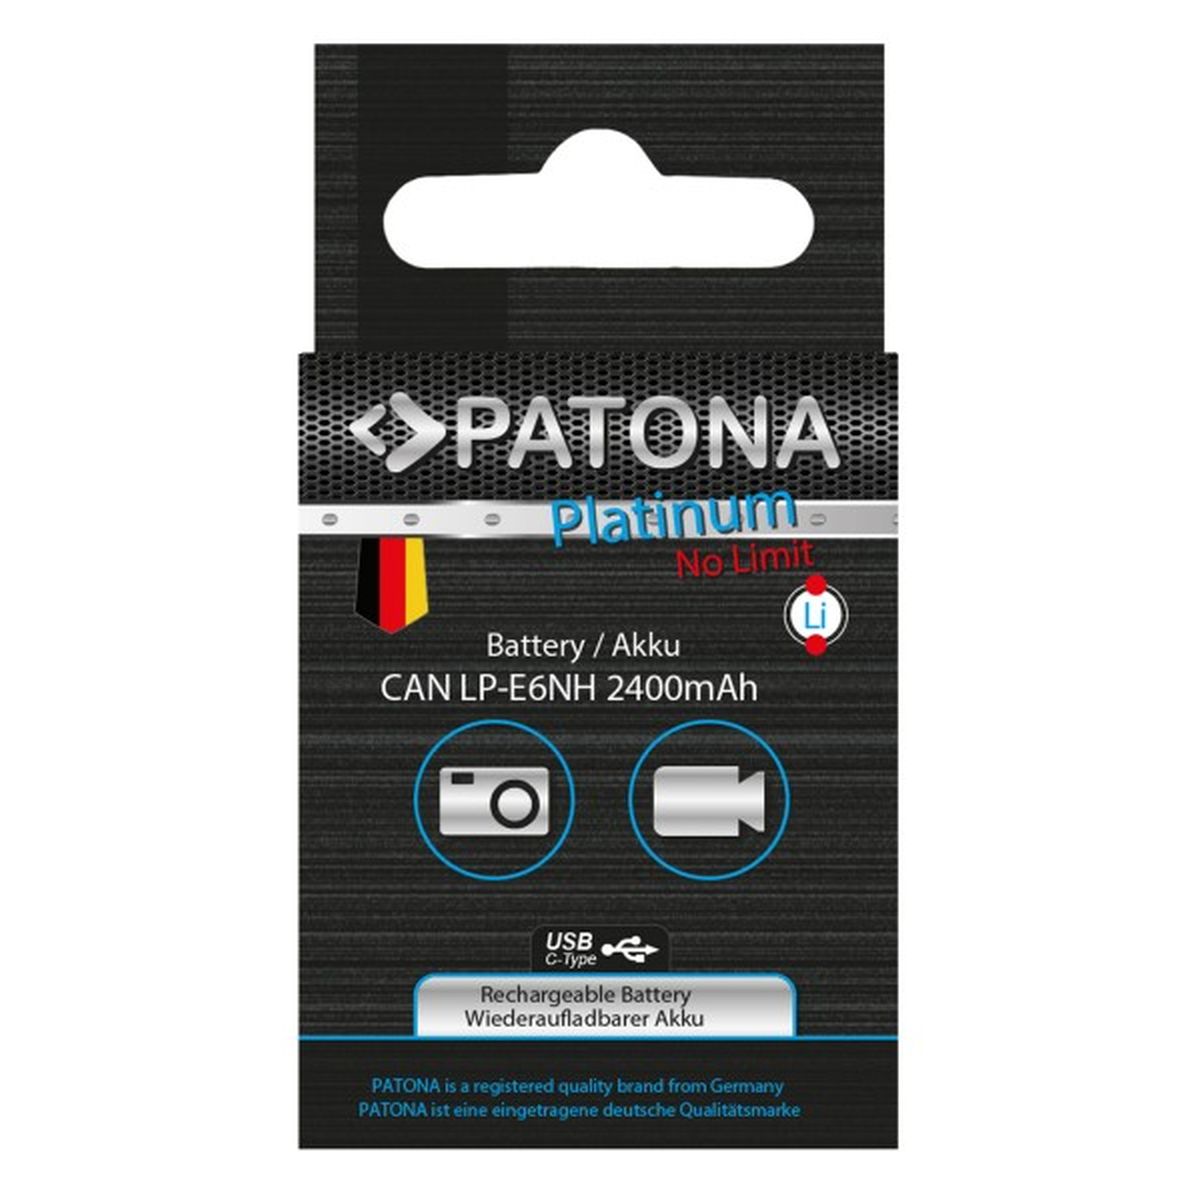 Patona Platinum Akku mit USB-C Input für Canon EOS R5, EOS R6, R6II, R7 und LP-E6NH